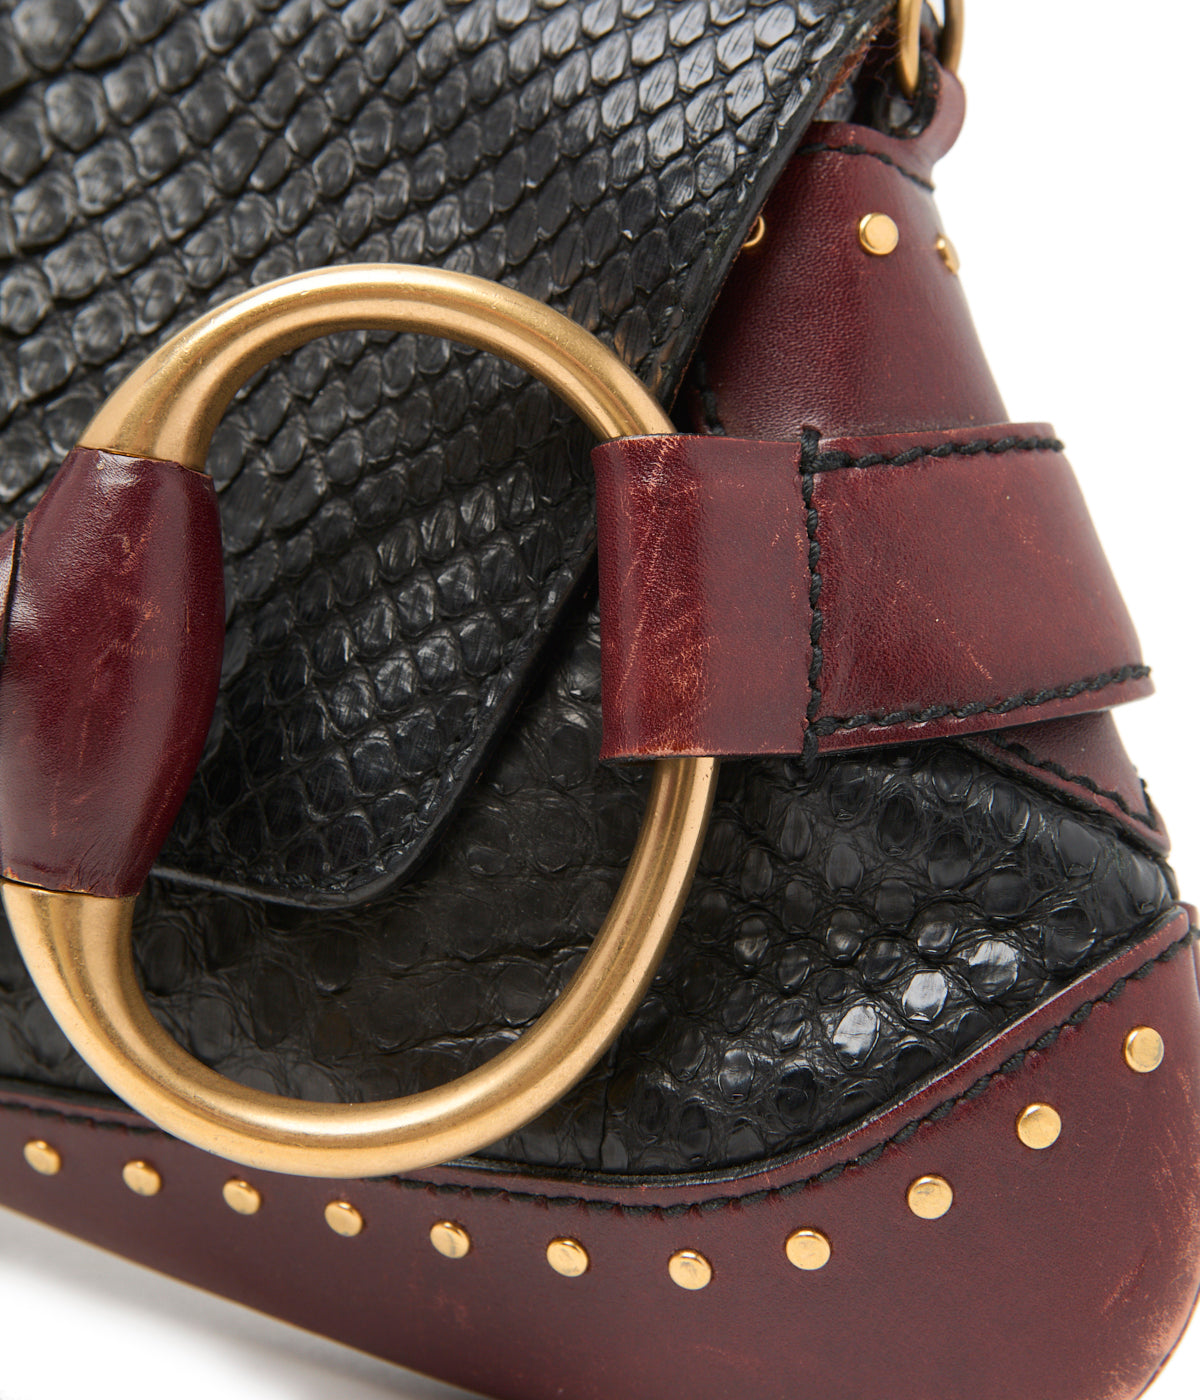 Pre-Owned Gucci Horsebit Tom Ford Python Chain Shoulder Bag